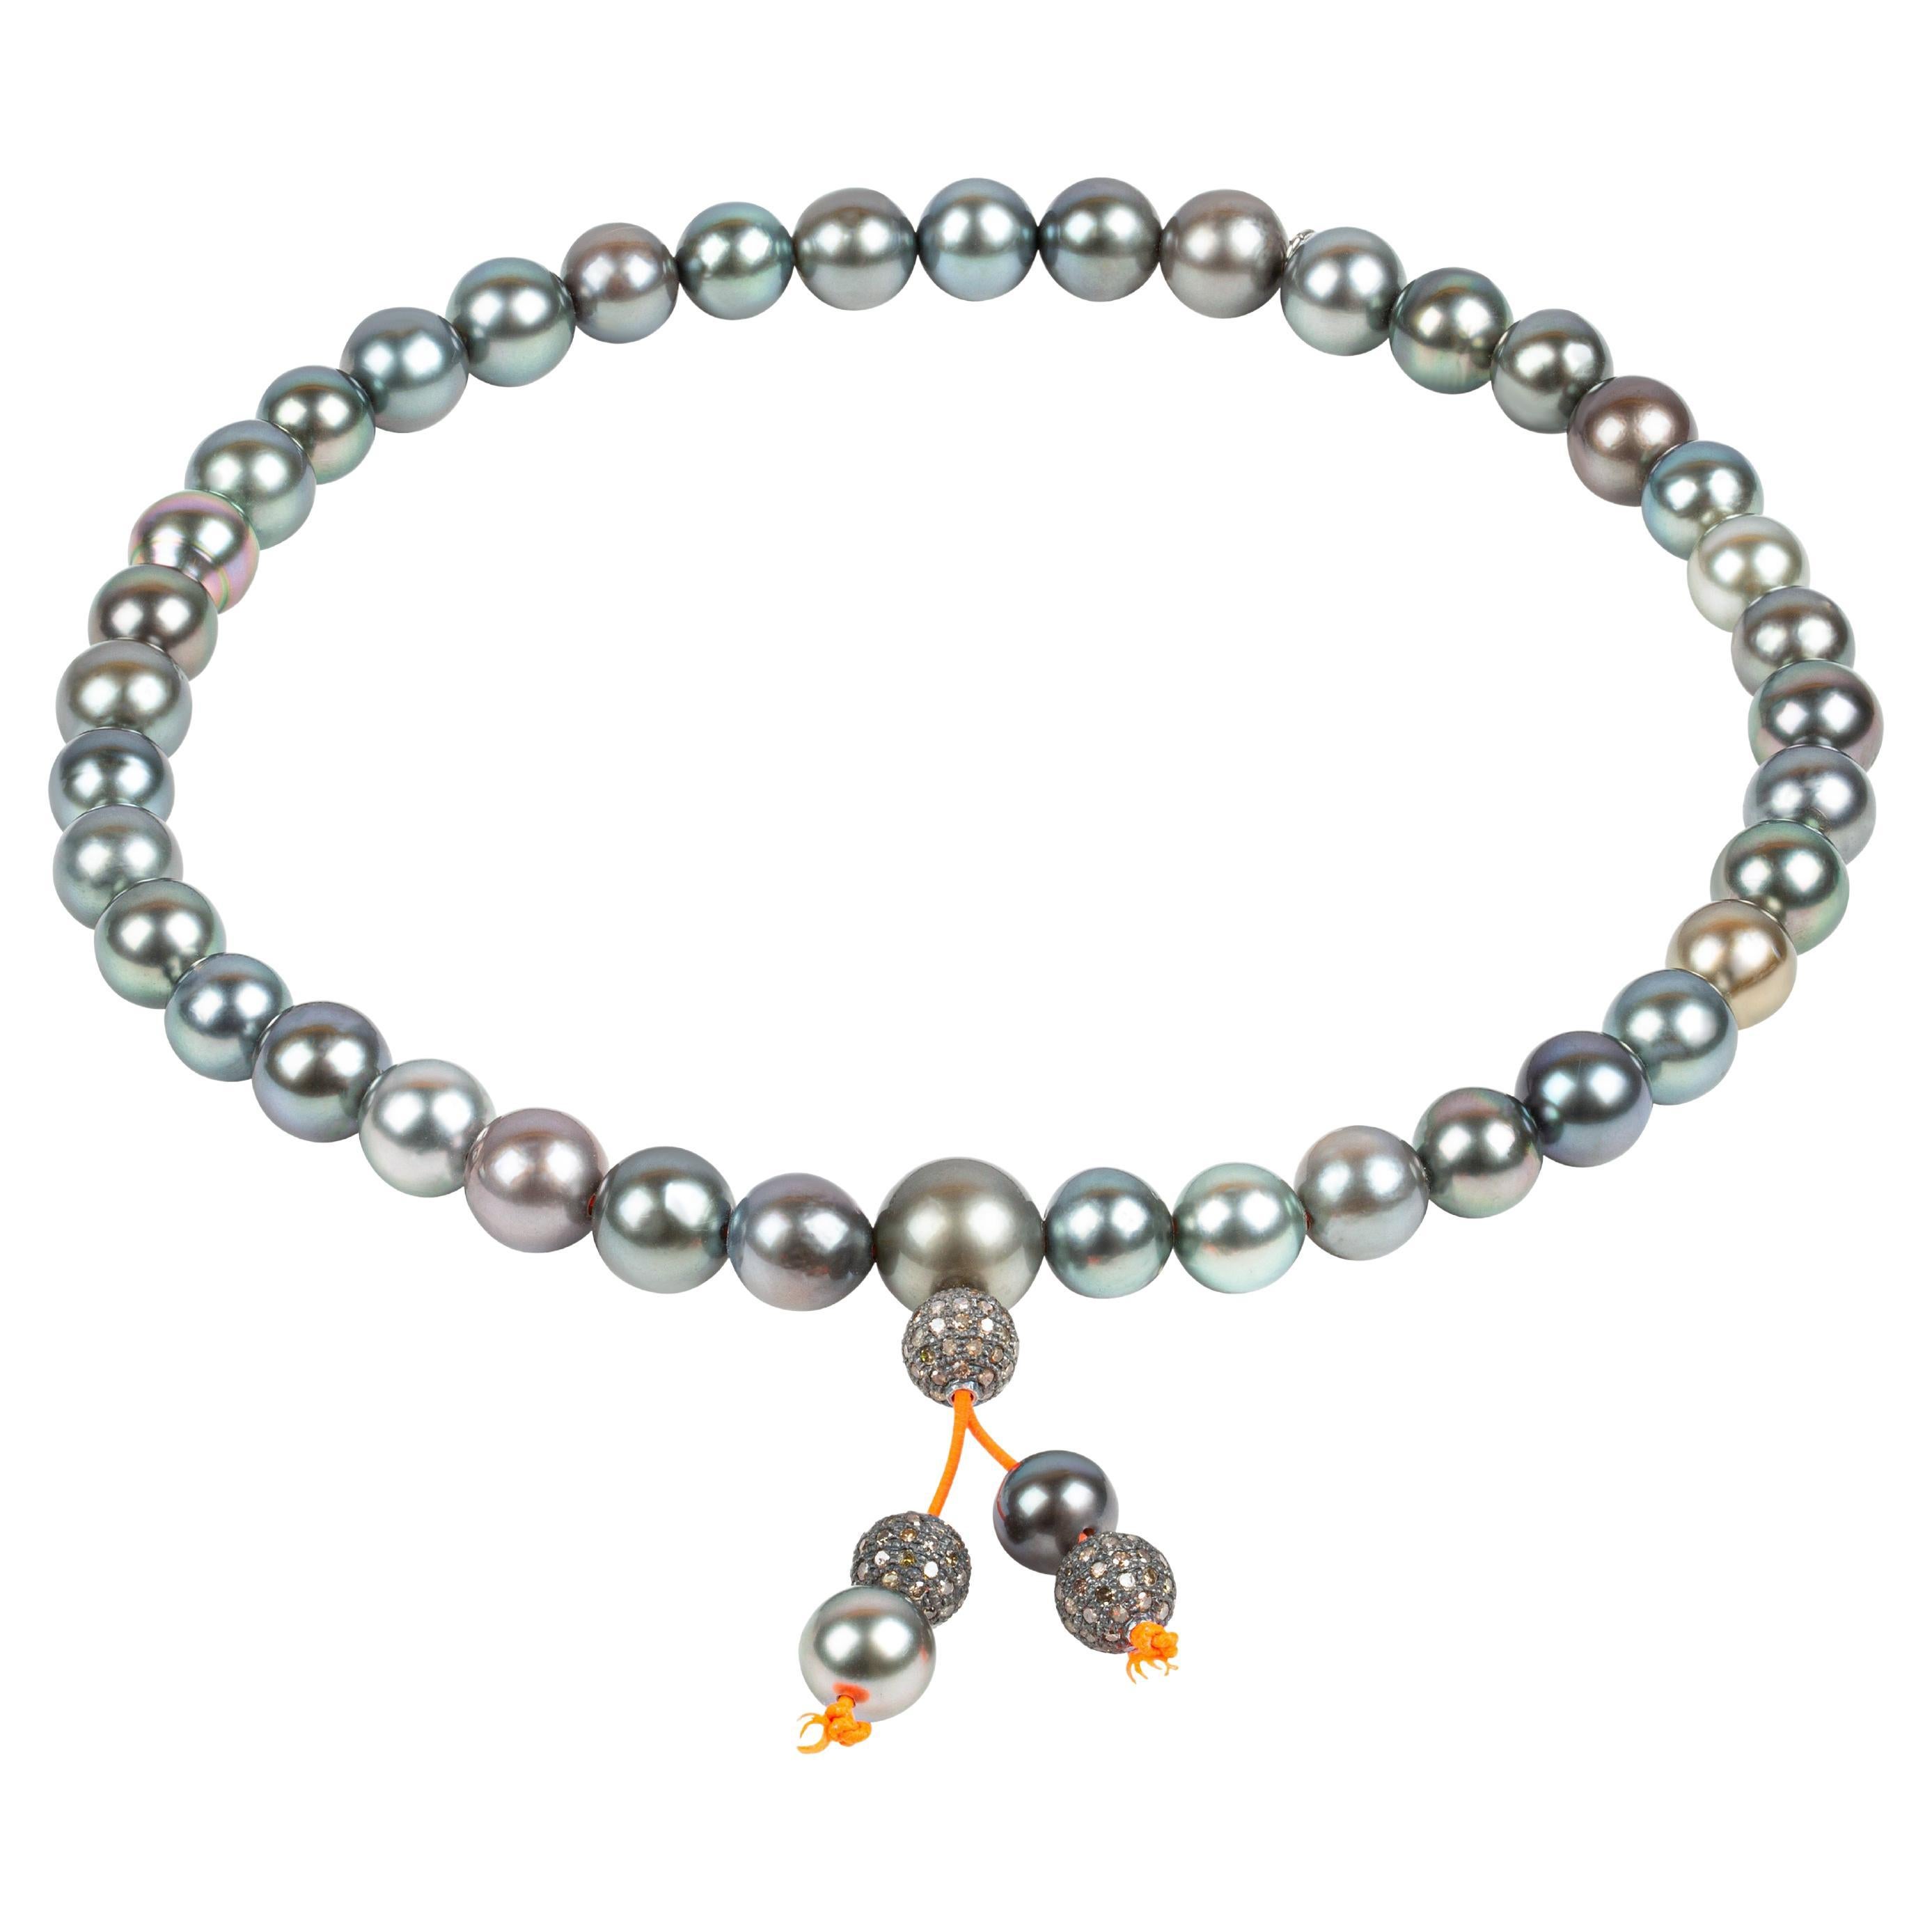 Prayer bracelet/necklace with Tahiti pearls and silver encrusted diamond beads